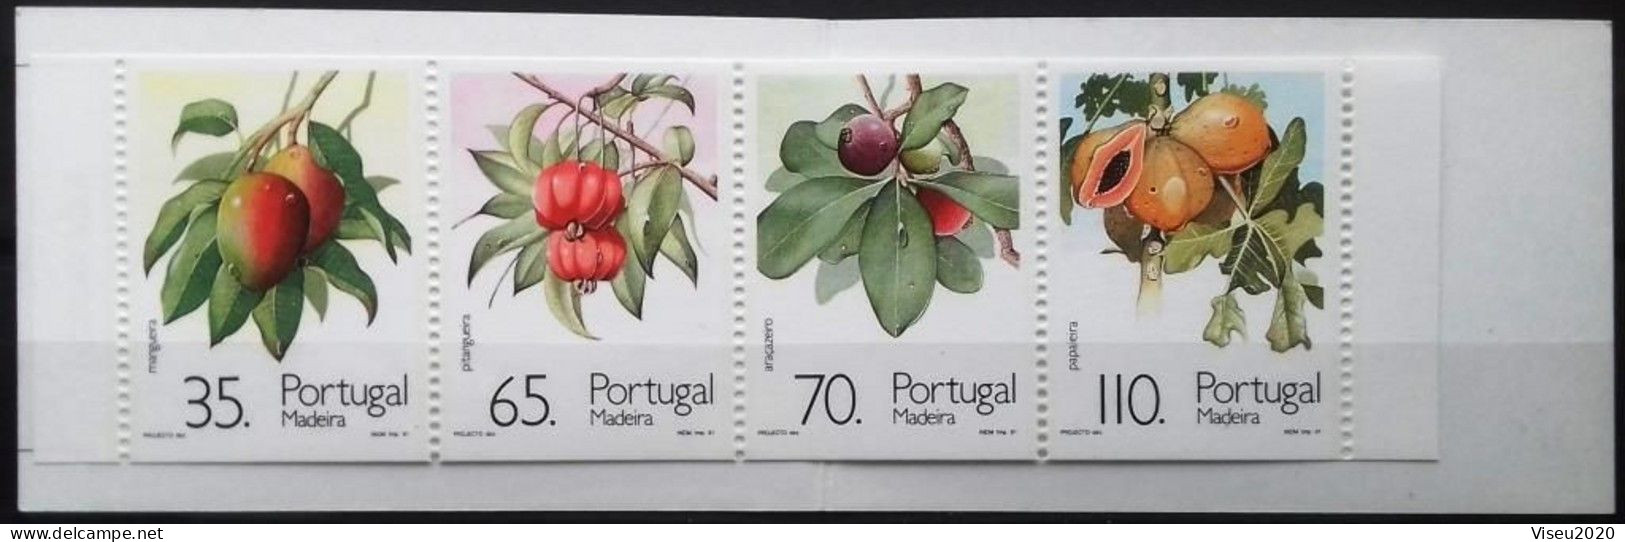 Portugal Booklet  Afinsa 79 -MADEIRA 1991 Fruits And Plants Of Subtropic Region MNH - Markenheftchen